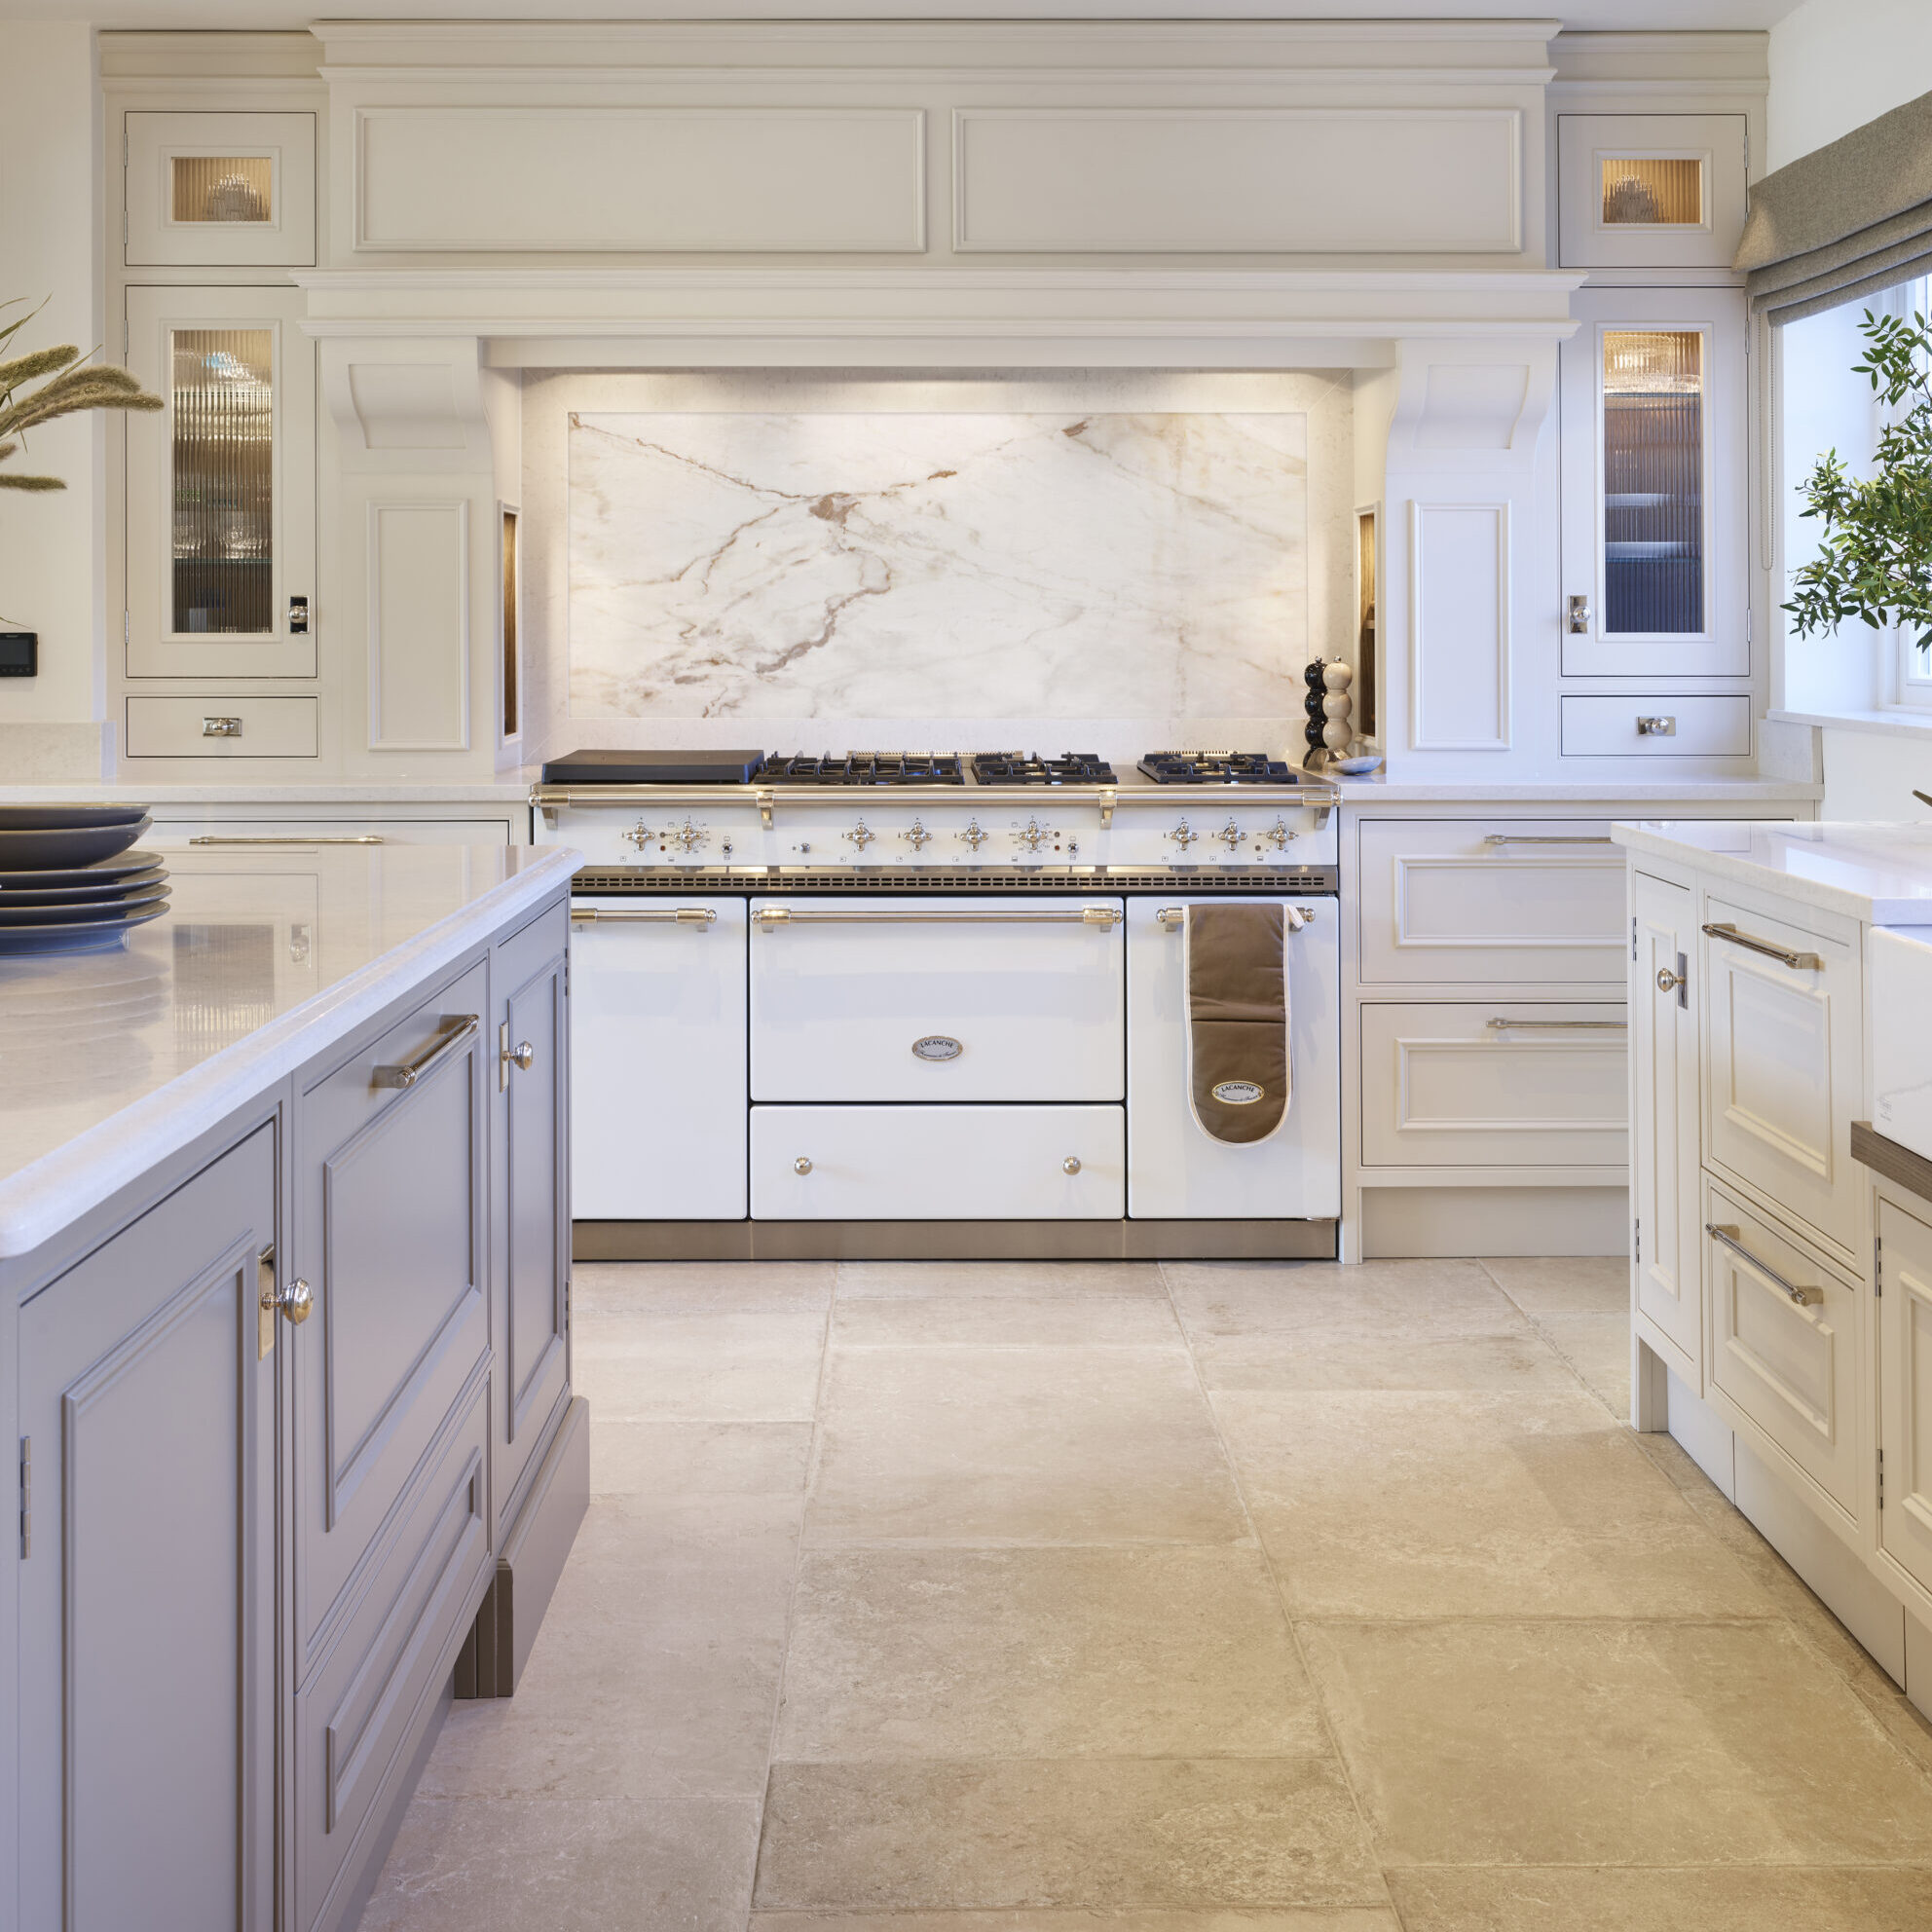 Kitchen design Inspiration porcelain tiles and natural stone - Lapicida